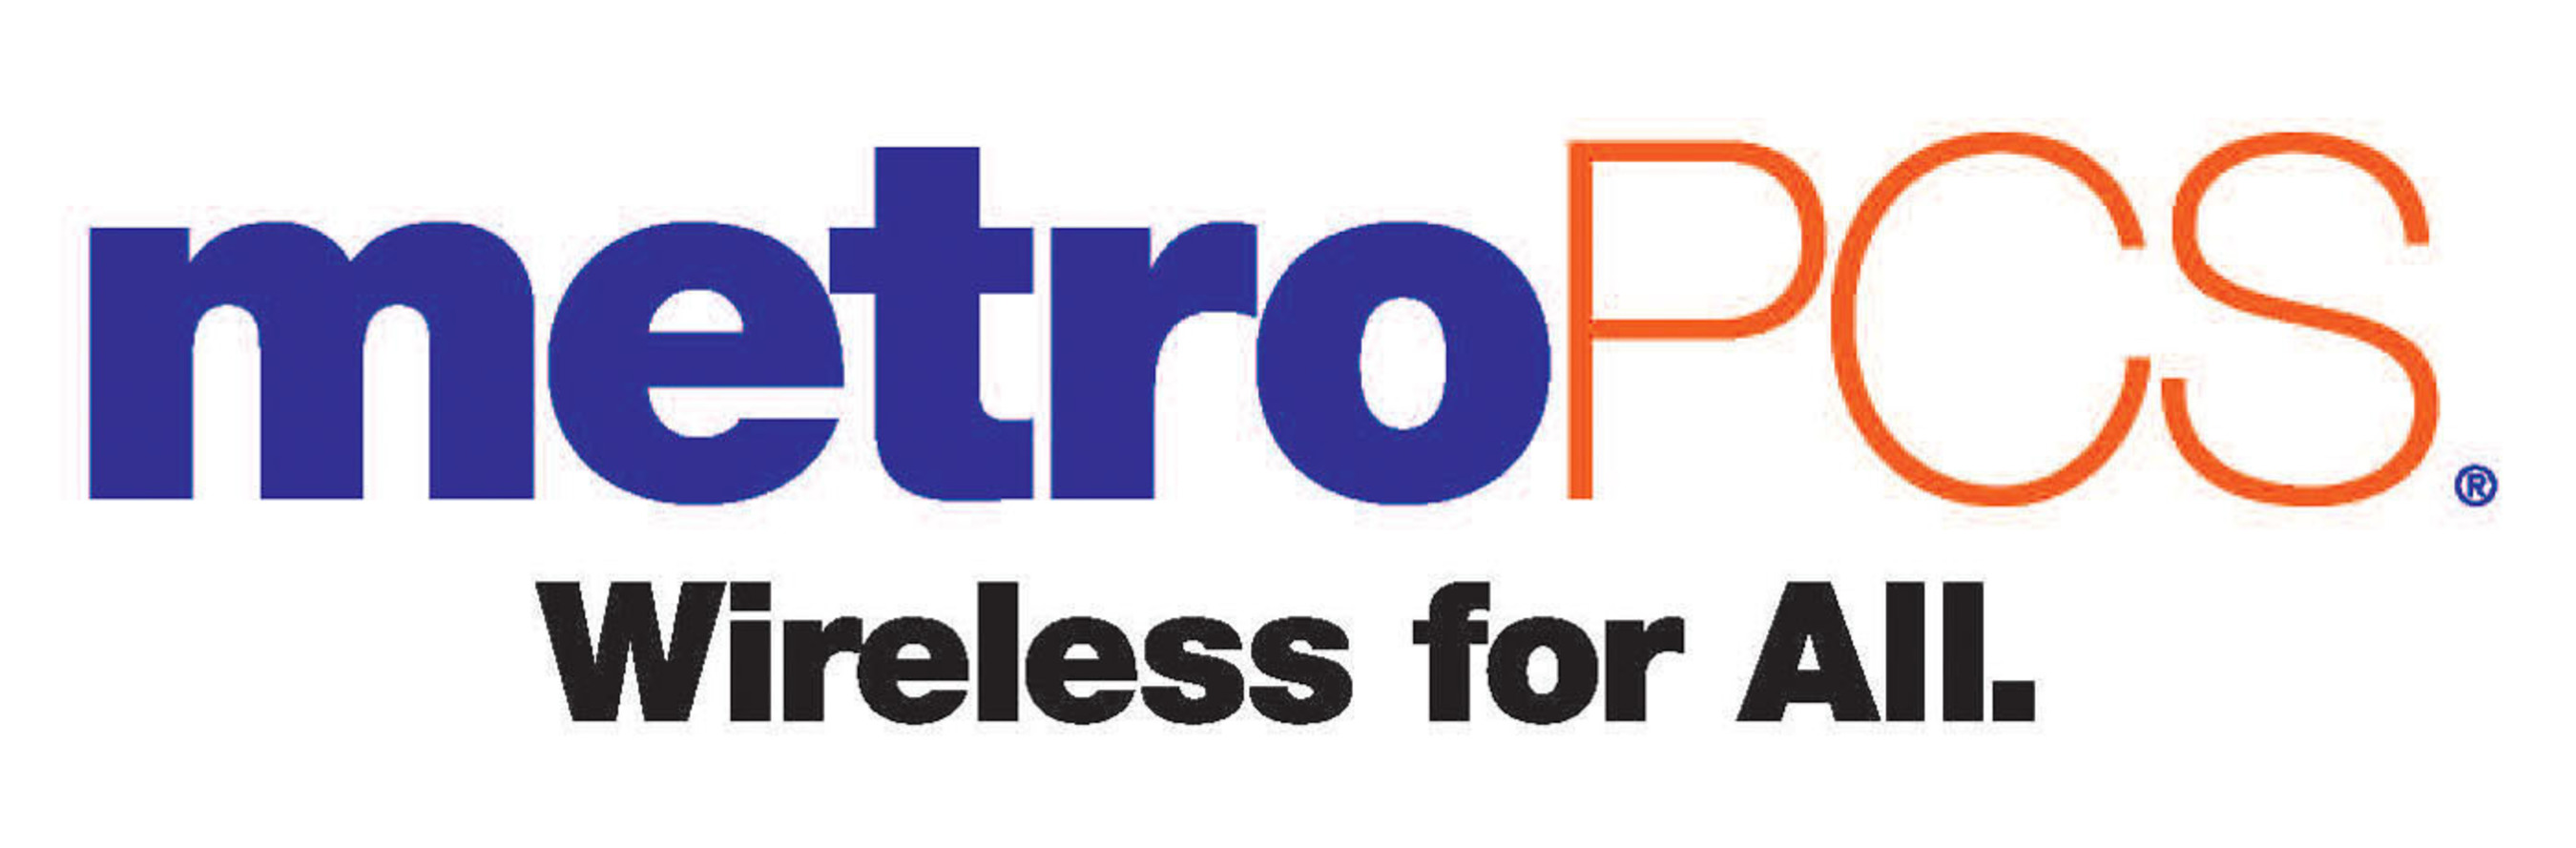 MetroPCS logo. (PRNewsFoto/MetroPCS Communications, Inc.) (PRNewsFoto/)